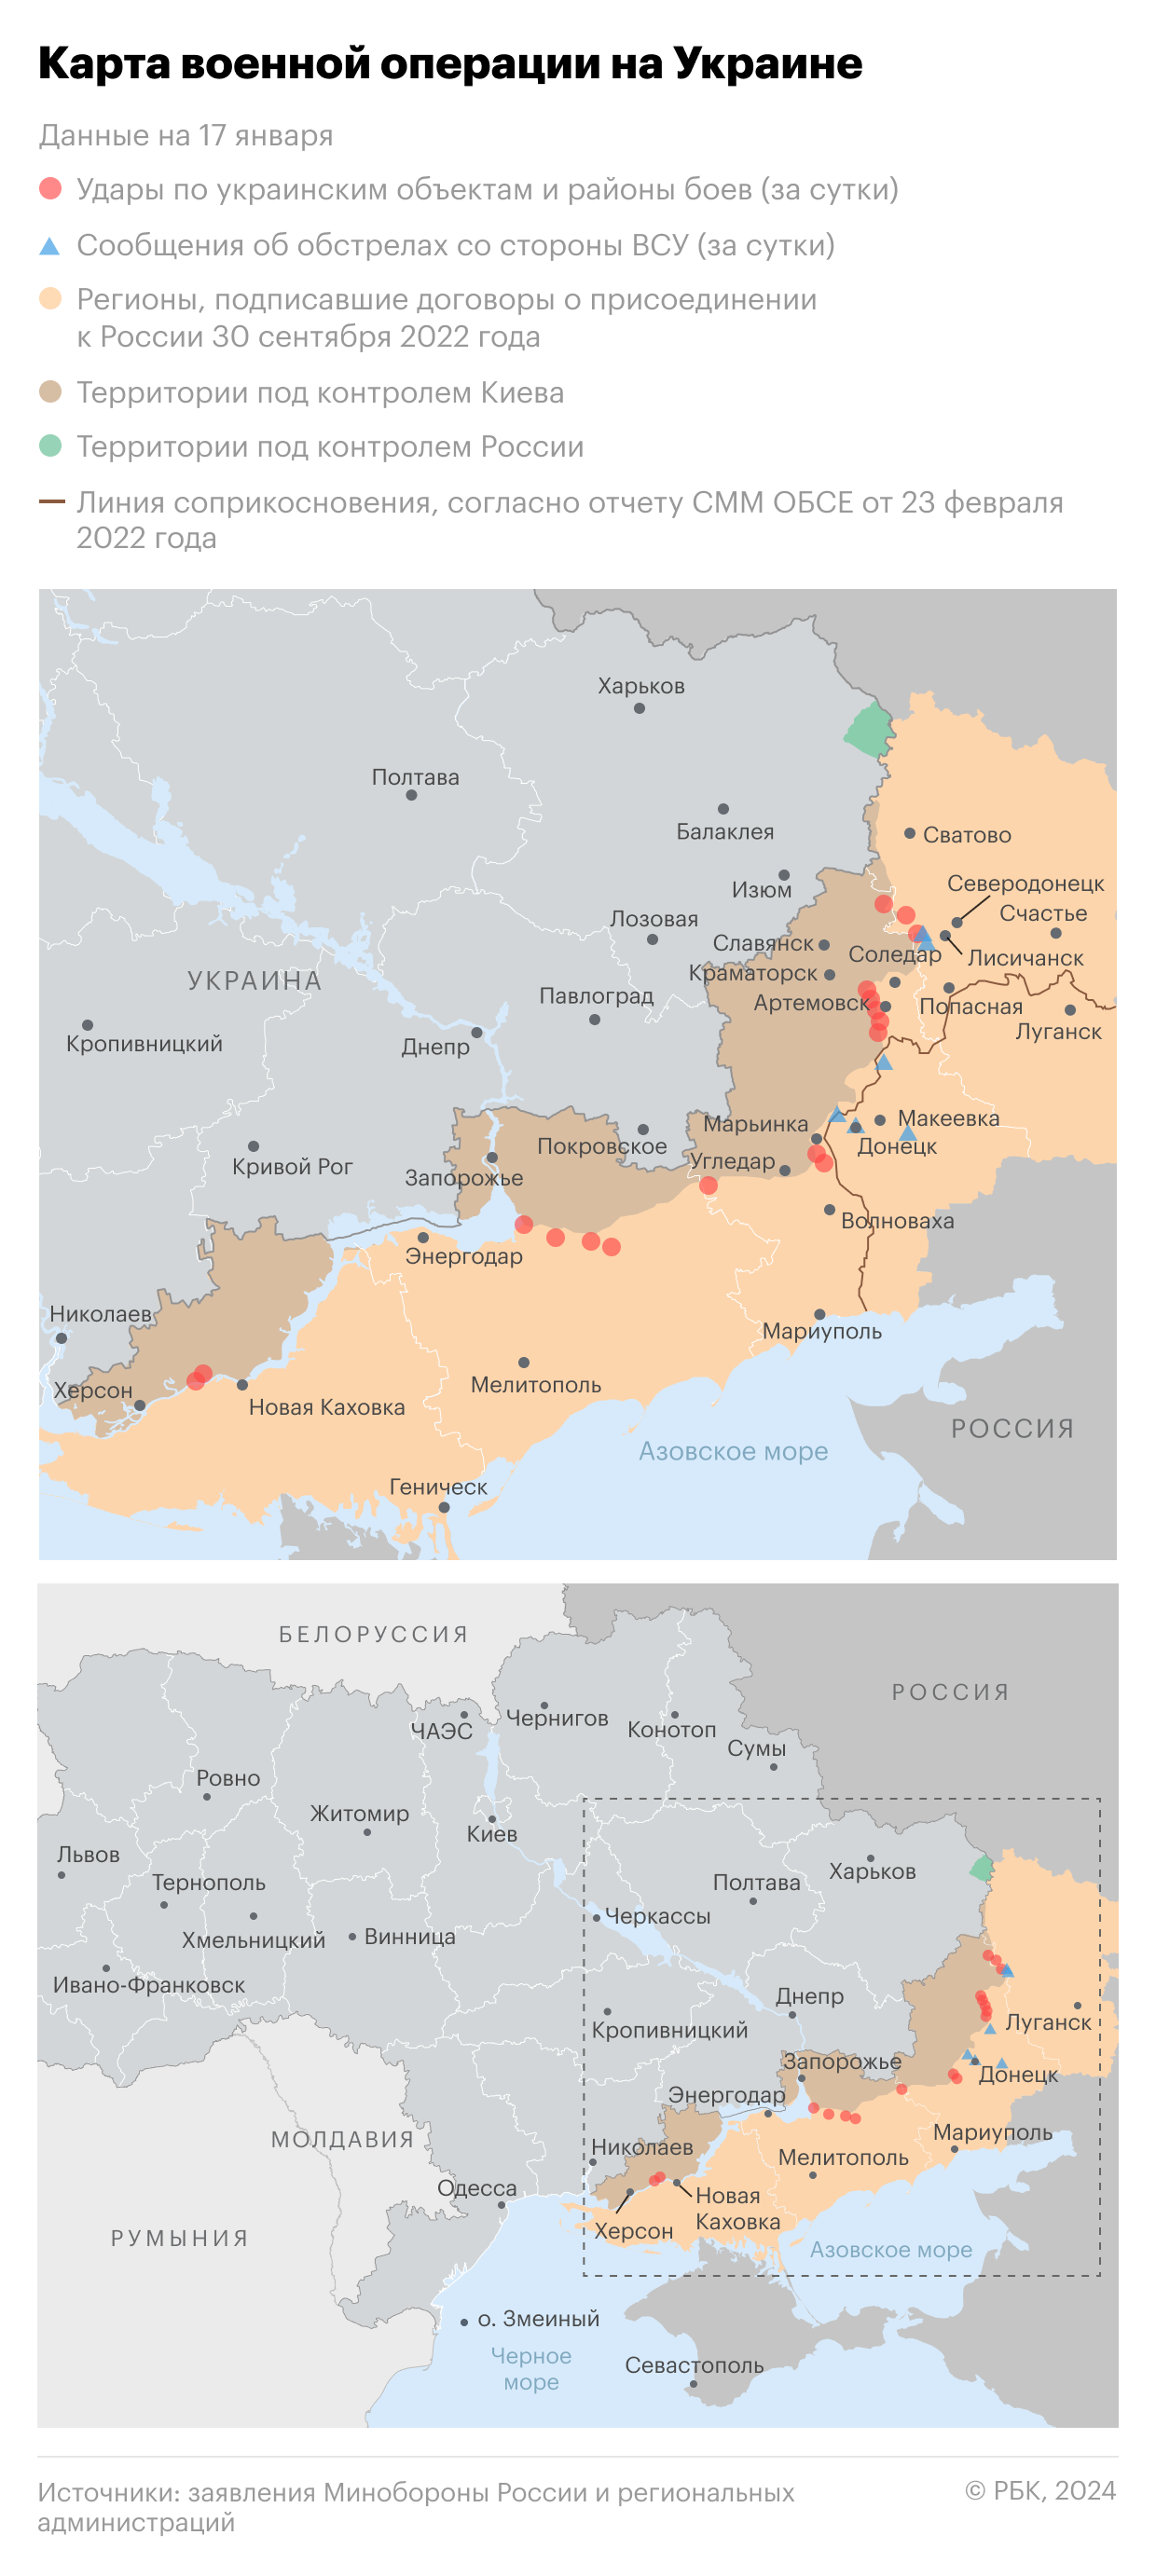 Военная операция на Украине. Карта на 17 января